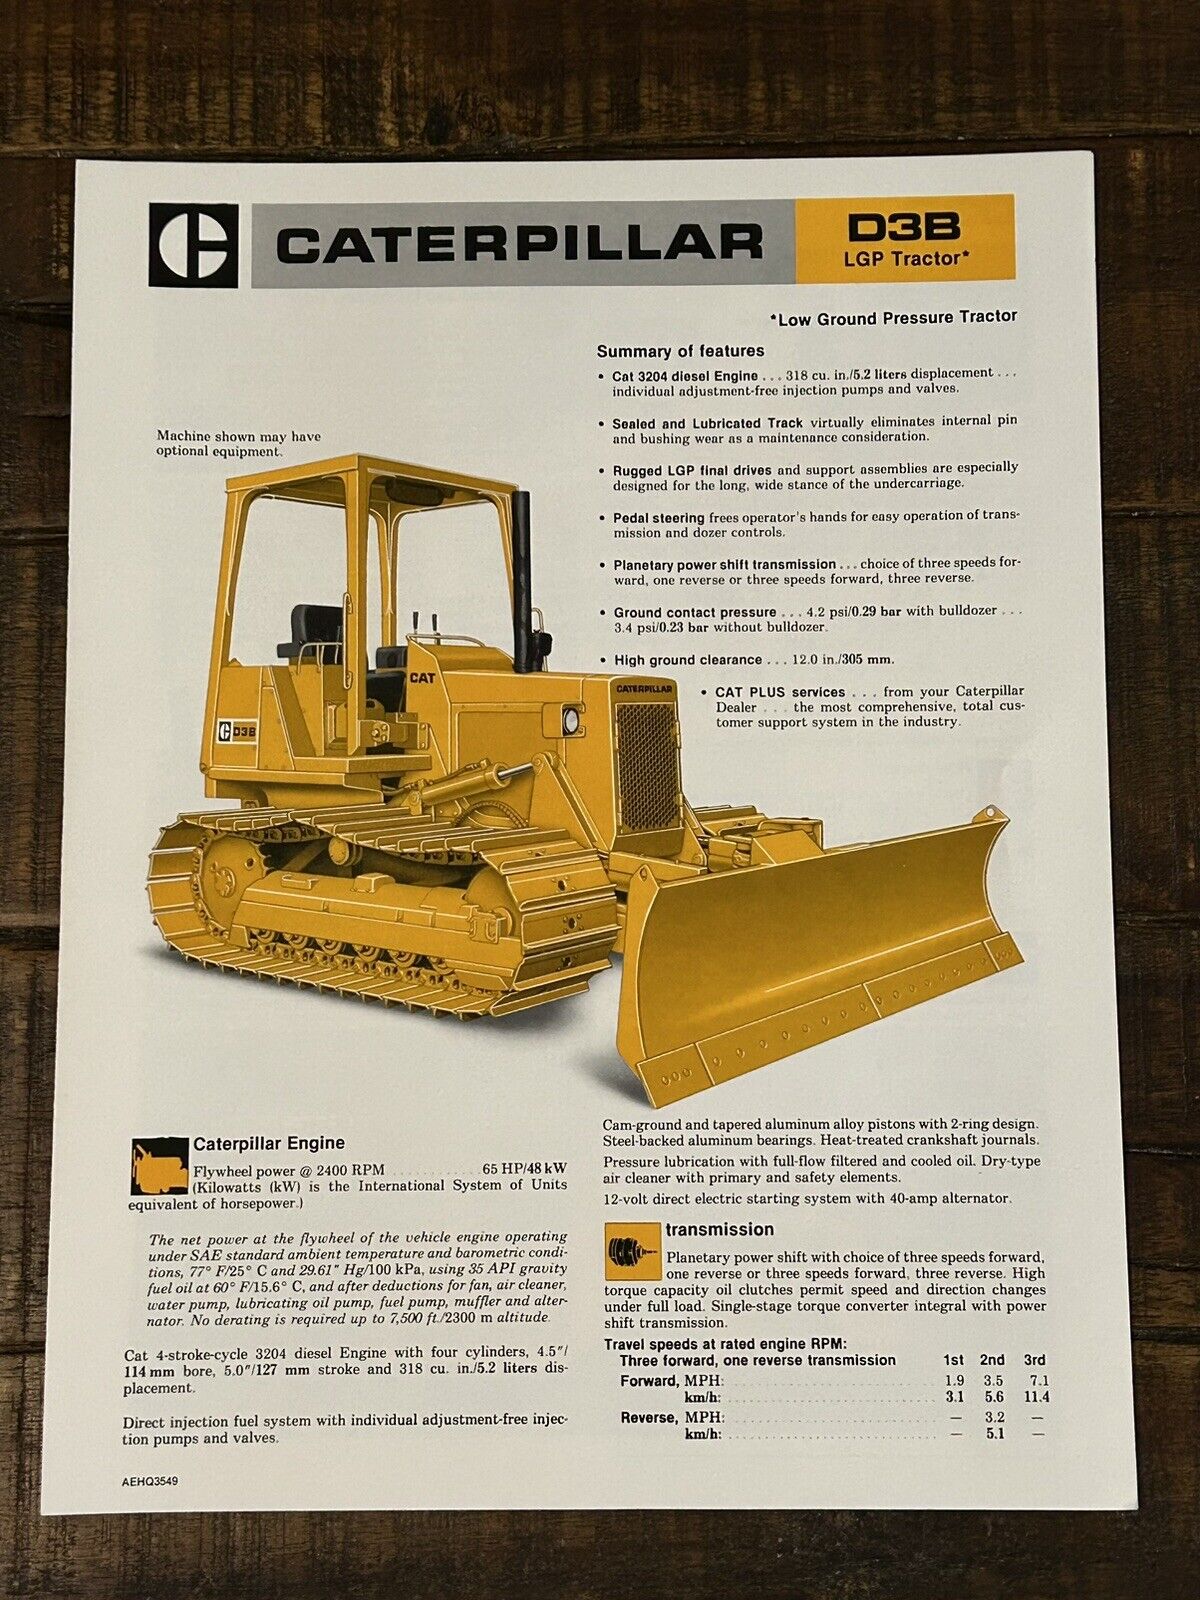 Caterpillar CAT D3B LGP (Low Ground Pressure) Dozer Brochure 1984